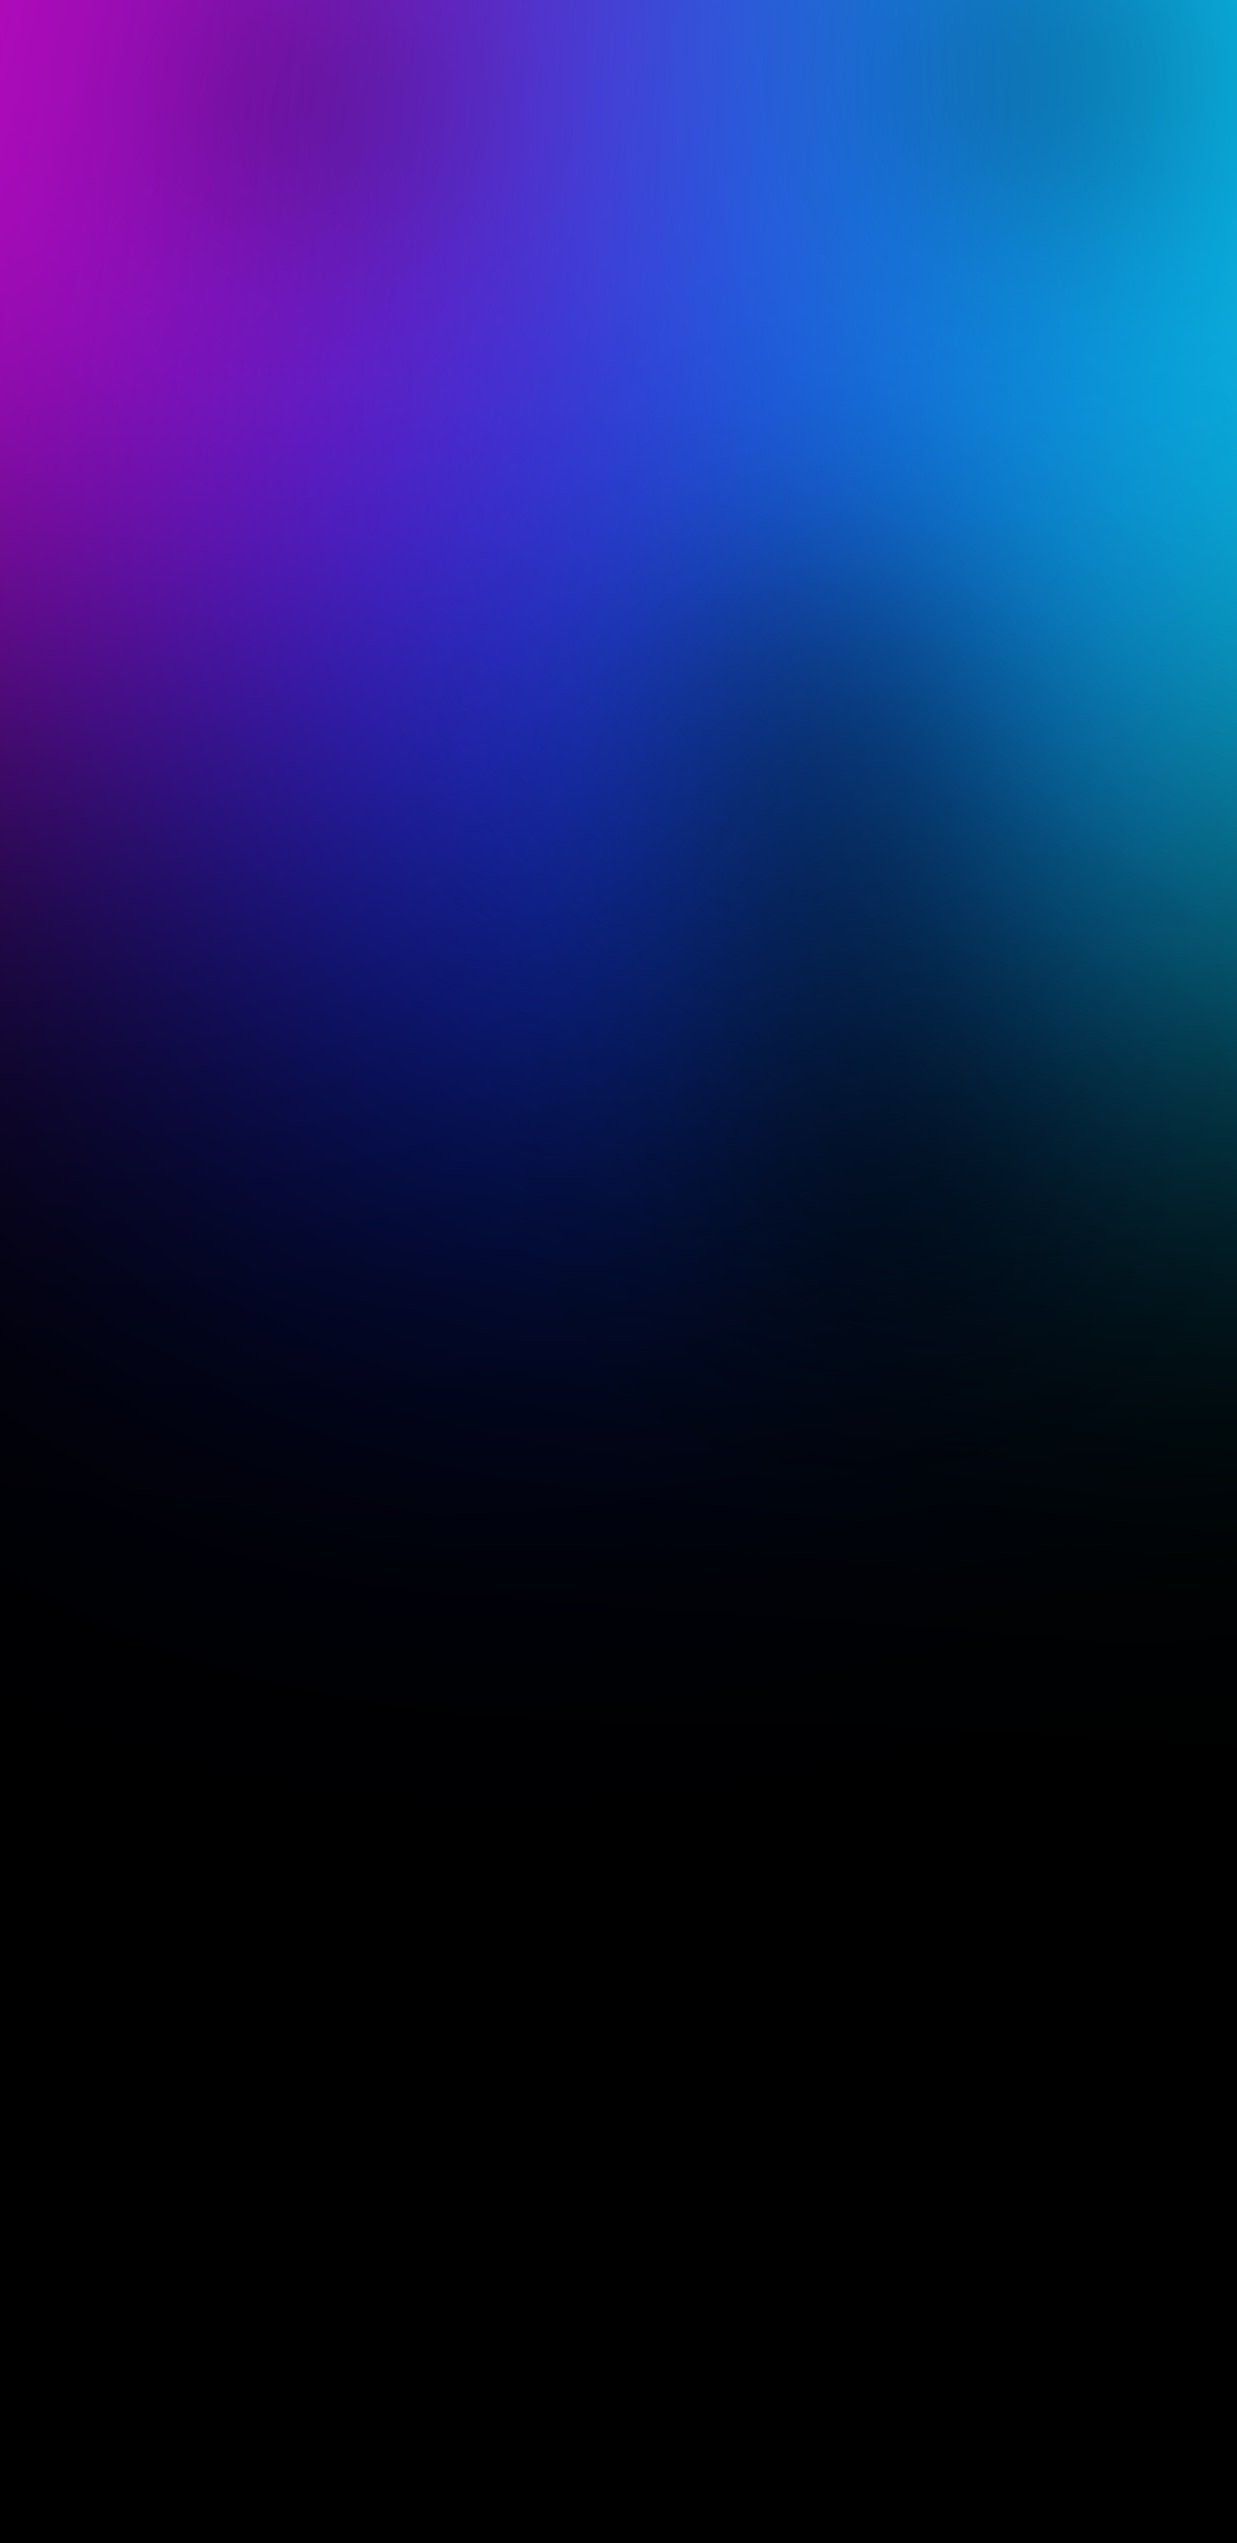 iPhone Wallpaper. Blue, Black, Violet, Purple, Electric blue, Sky